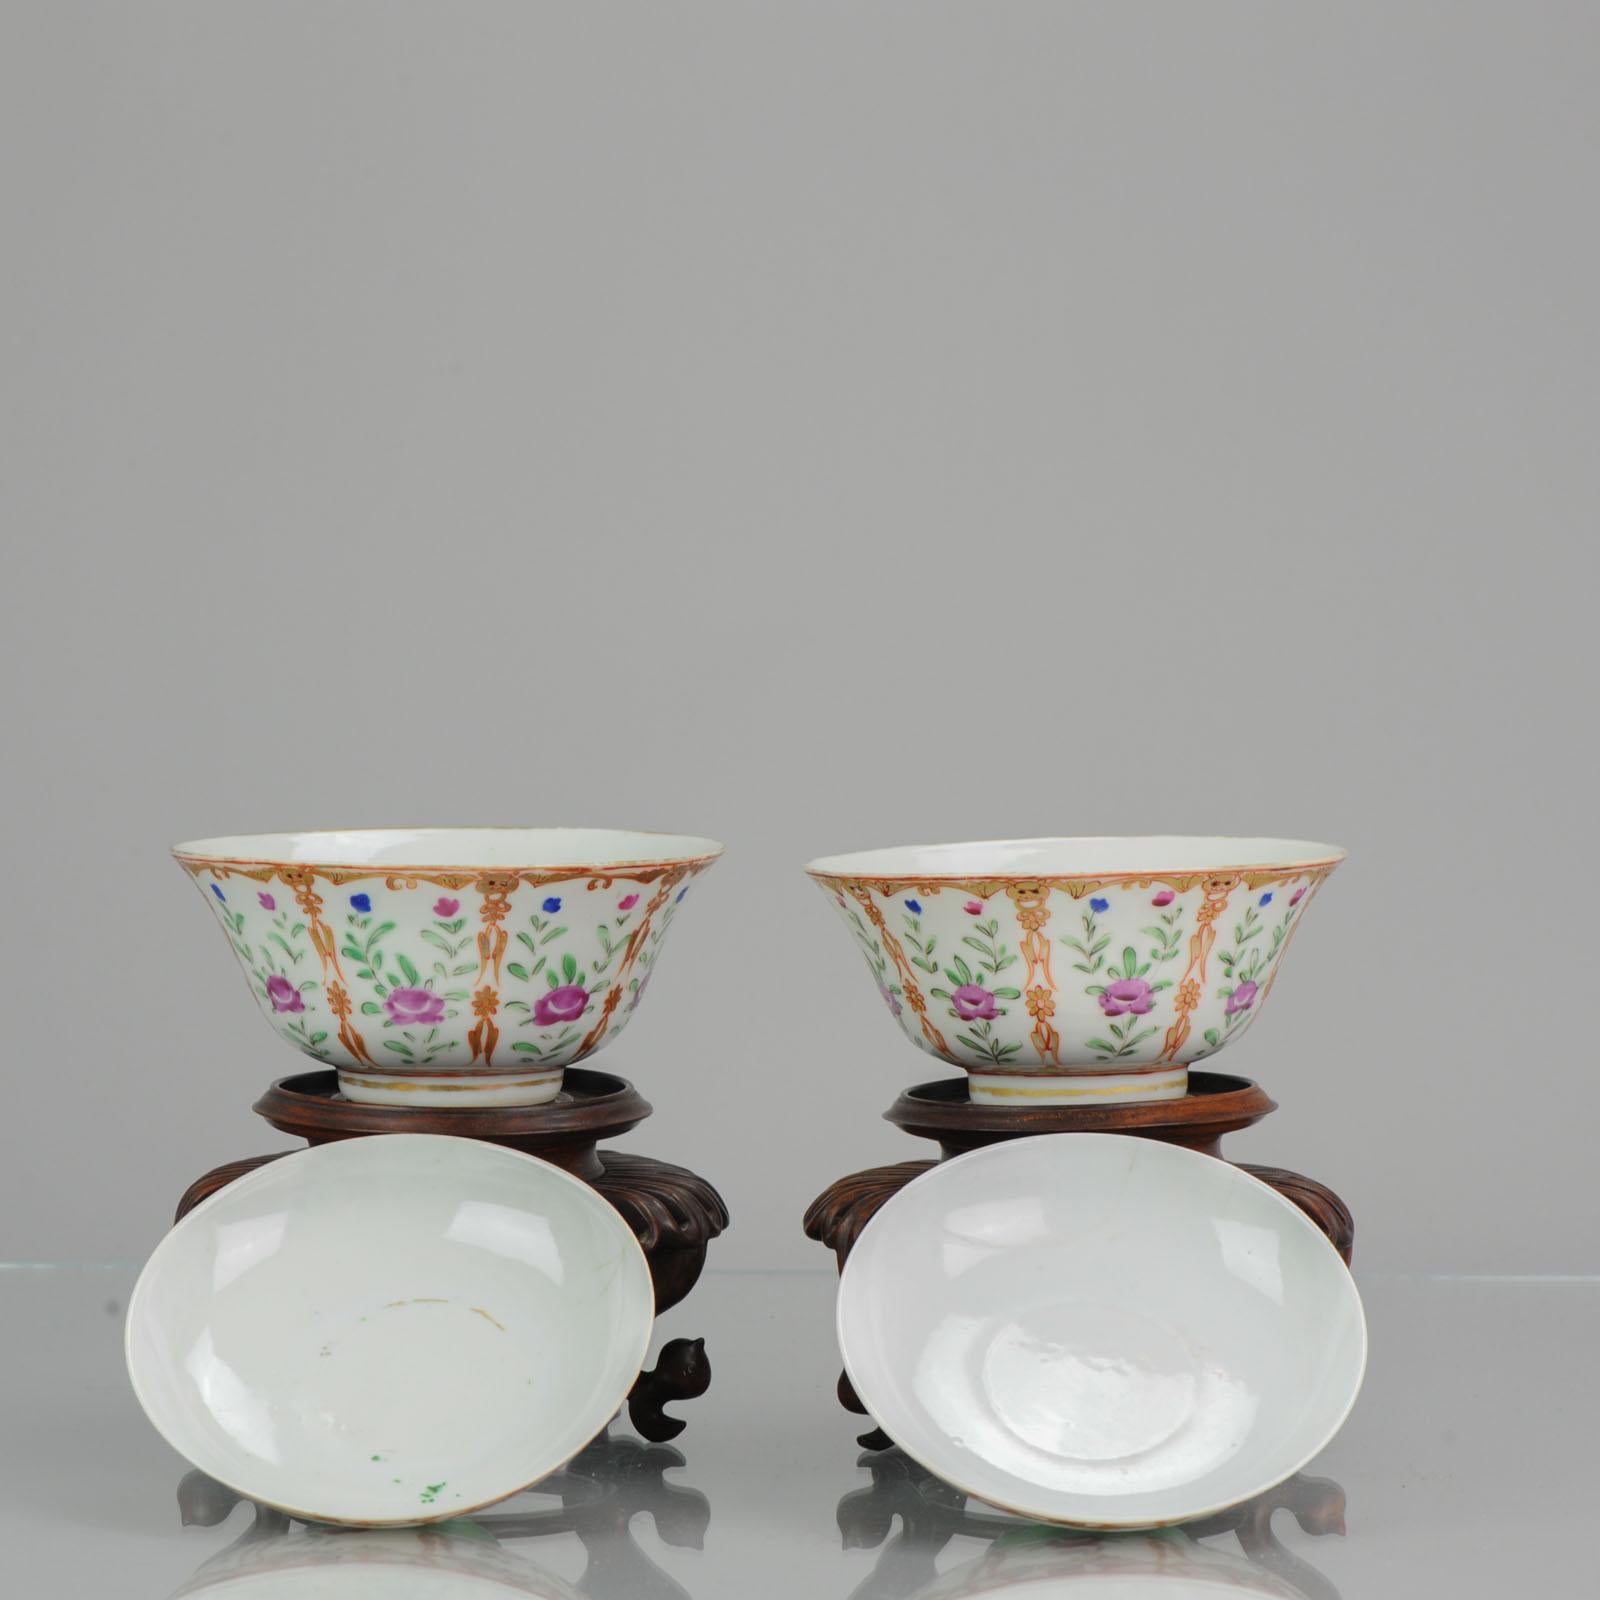 Antique Chinese Porcelain Lidded Bowls SE Asia Market Bencharong Thai Market 2